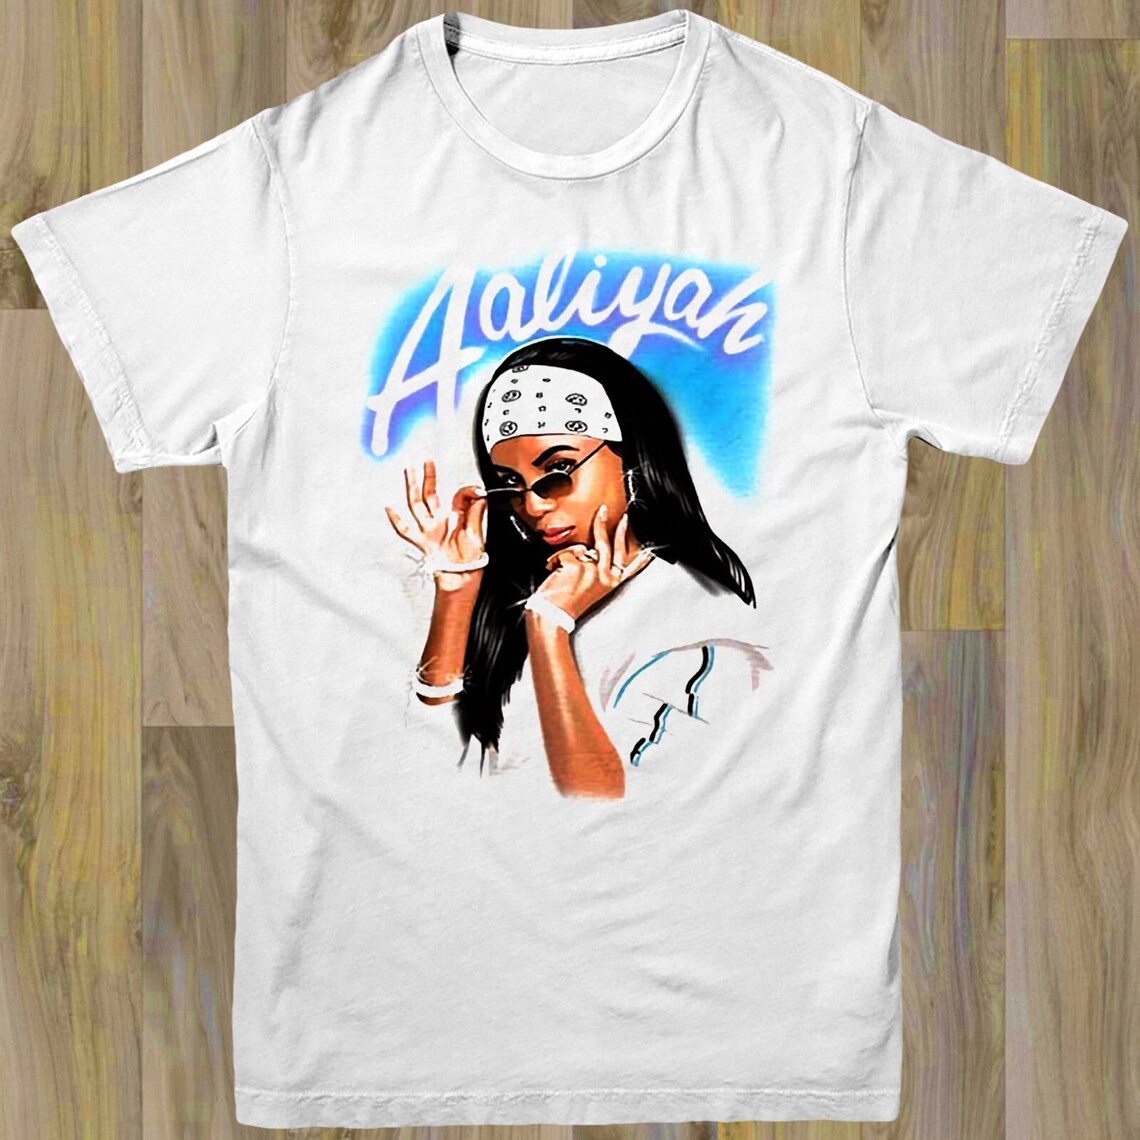 Aaliyah Band Tee T Shirt S-XL Retro Vintage Design Hip Hop | Etsy